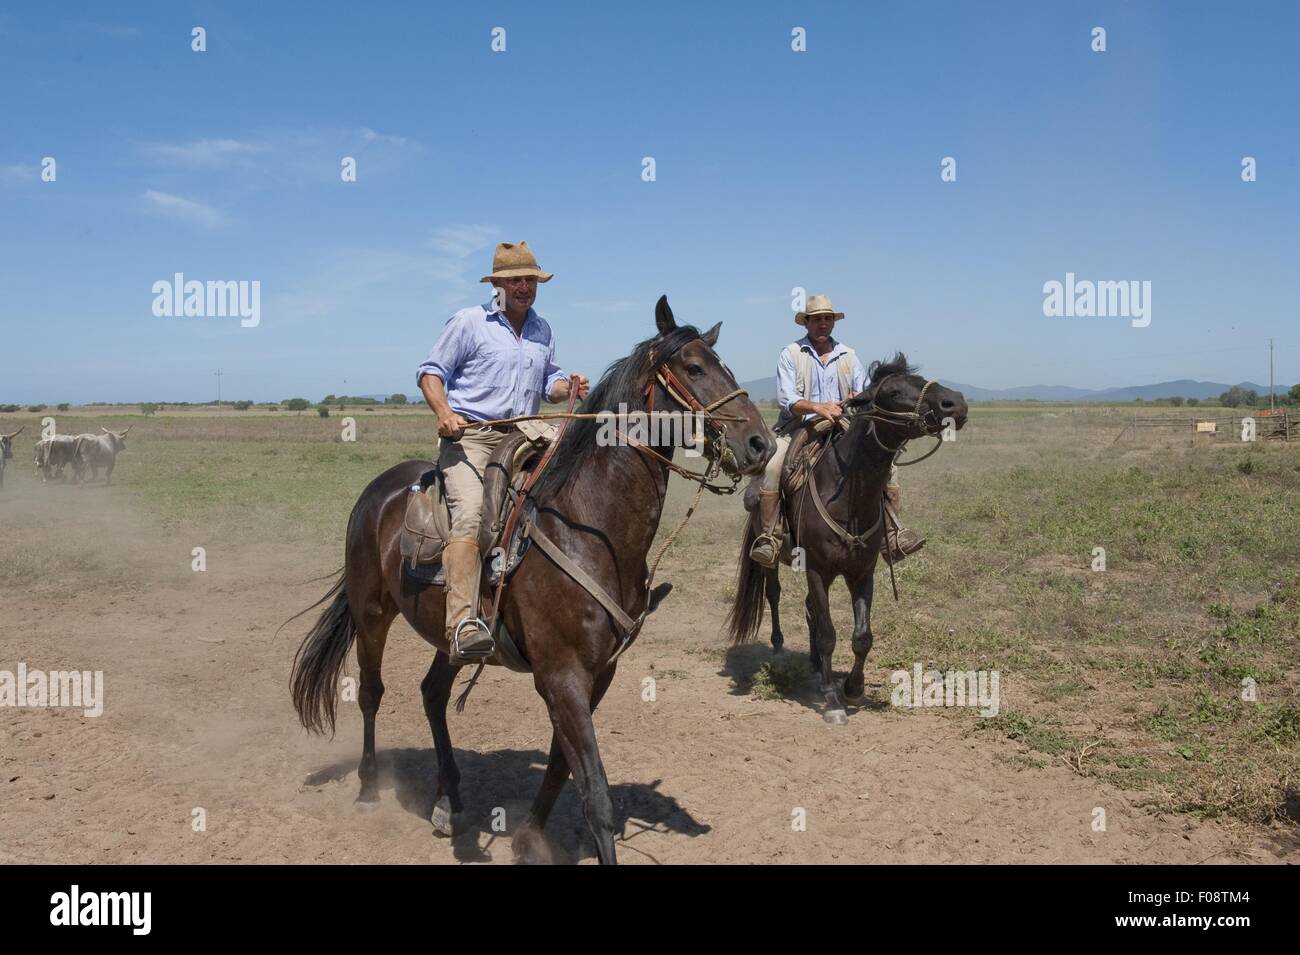 Men wearing cowboy hat riding horse on road Stock Photo